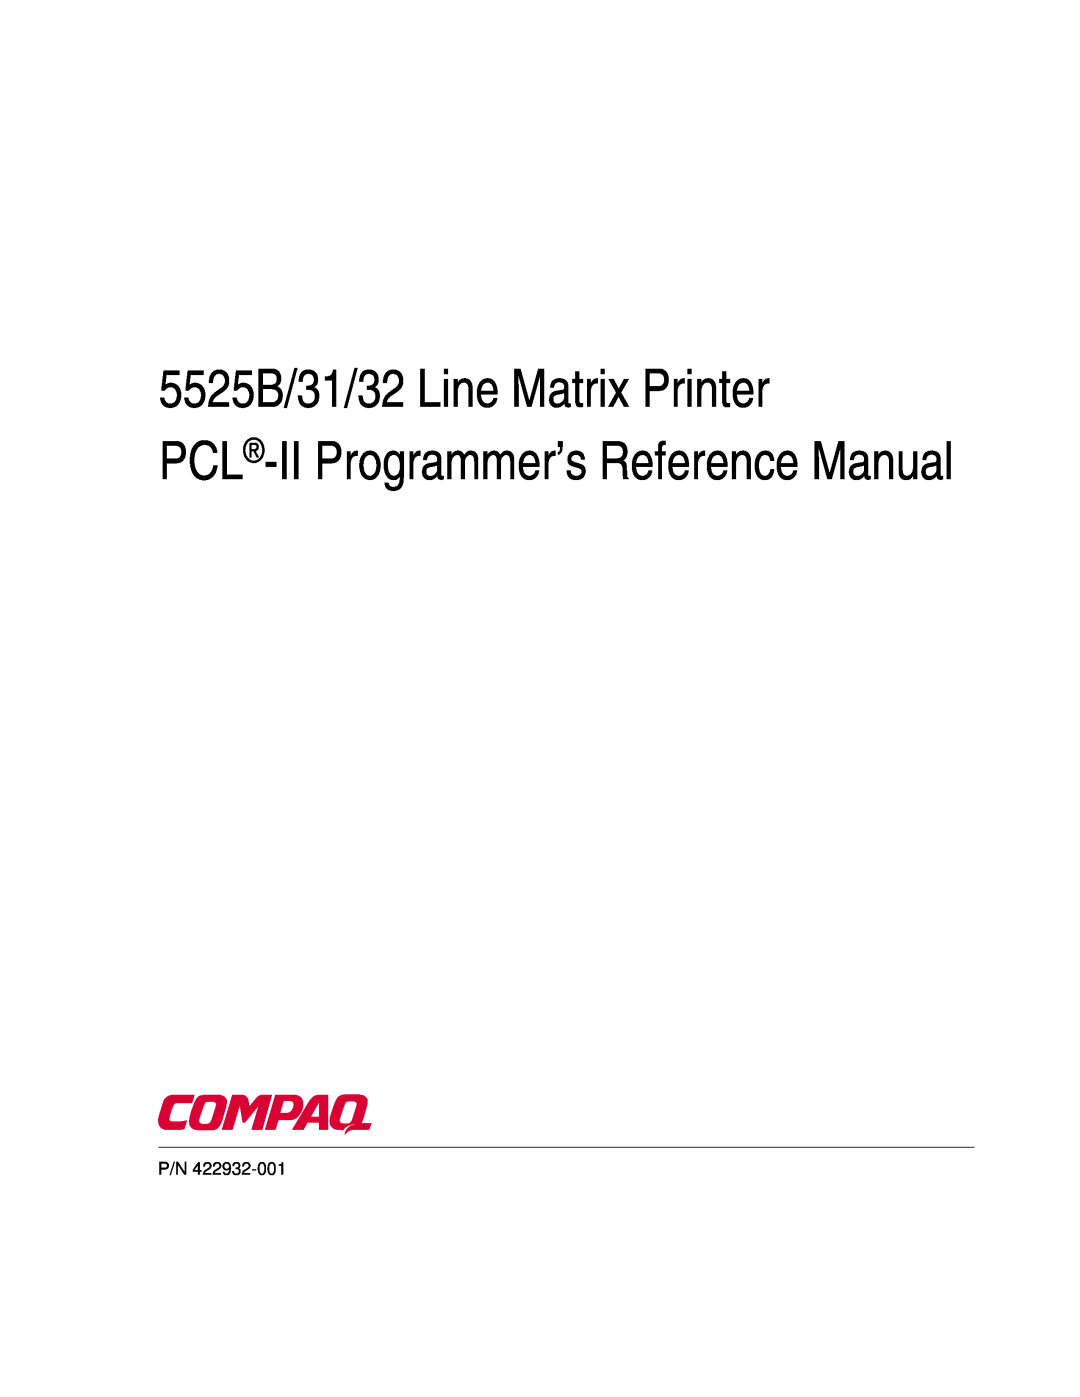 Compaq manual 5525B/31/32 Line Matrix Printer, PCL-II Programmer’s Reference Manual 